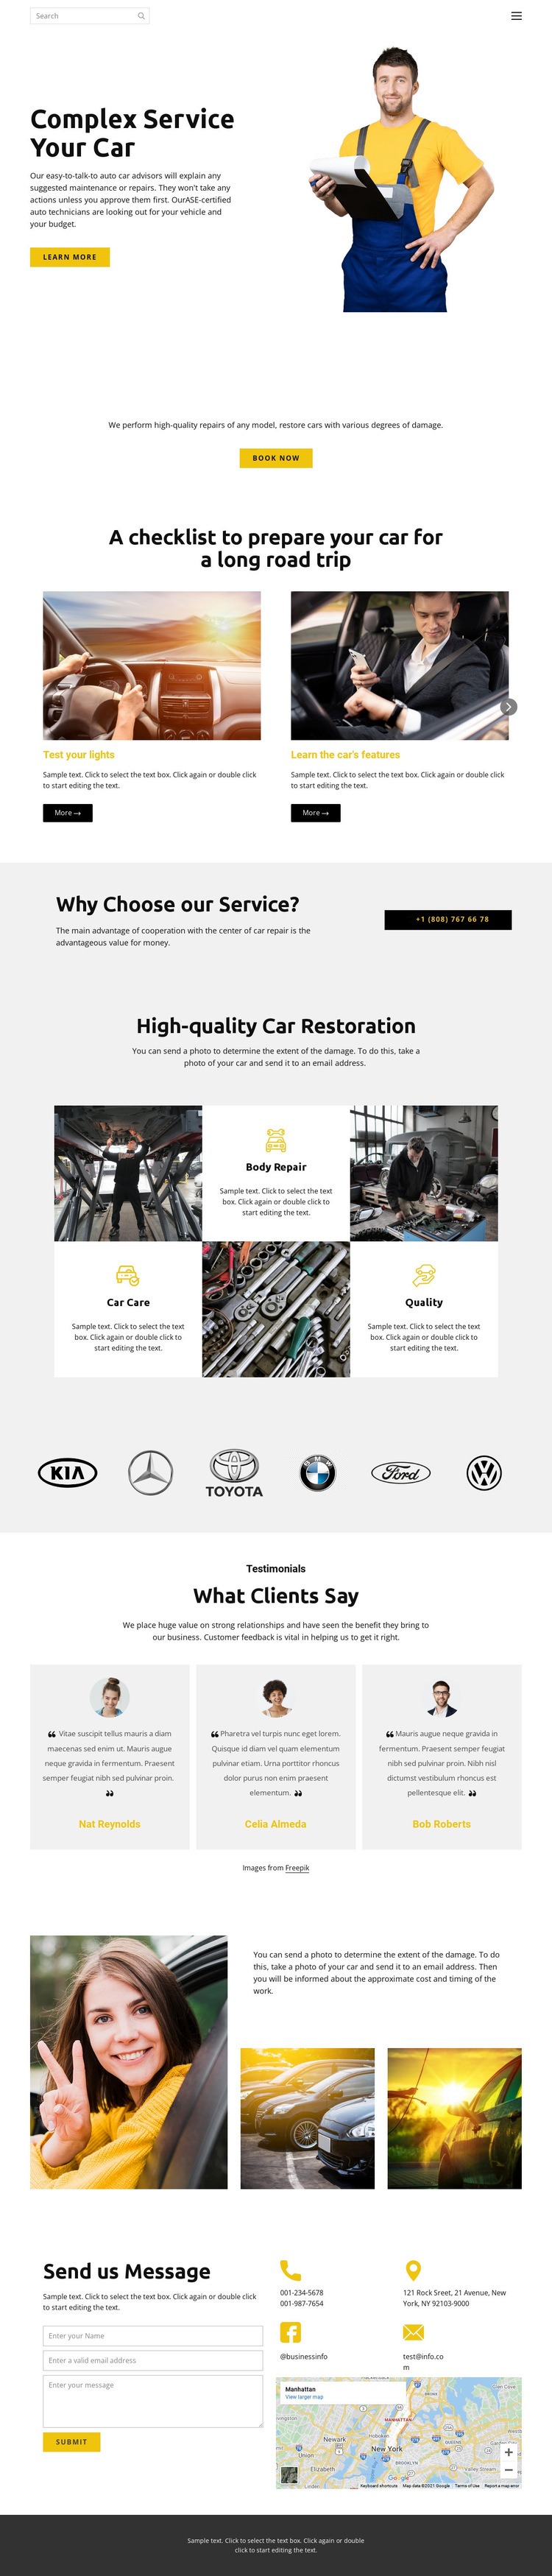 Car service Web Page Design